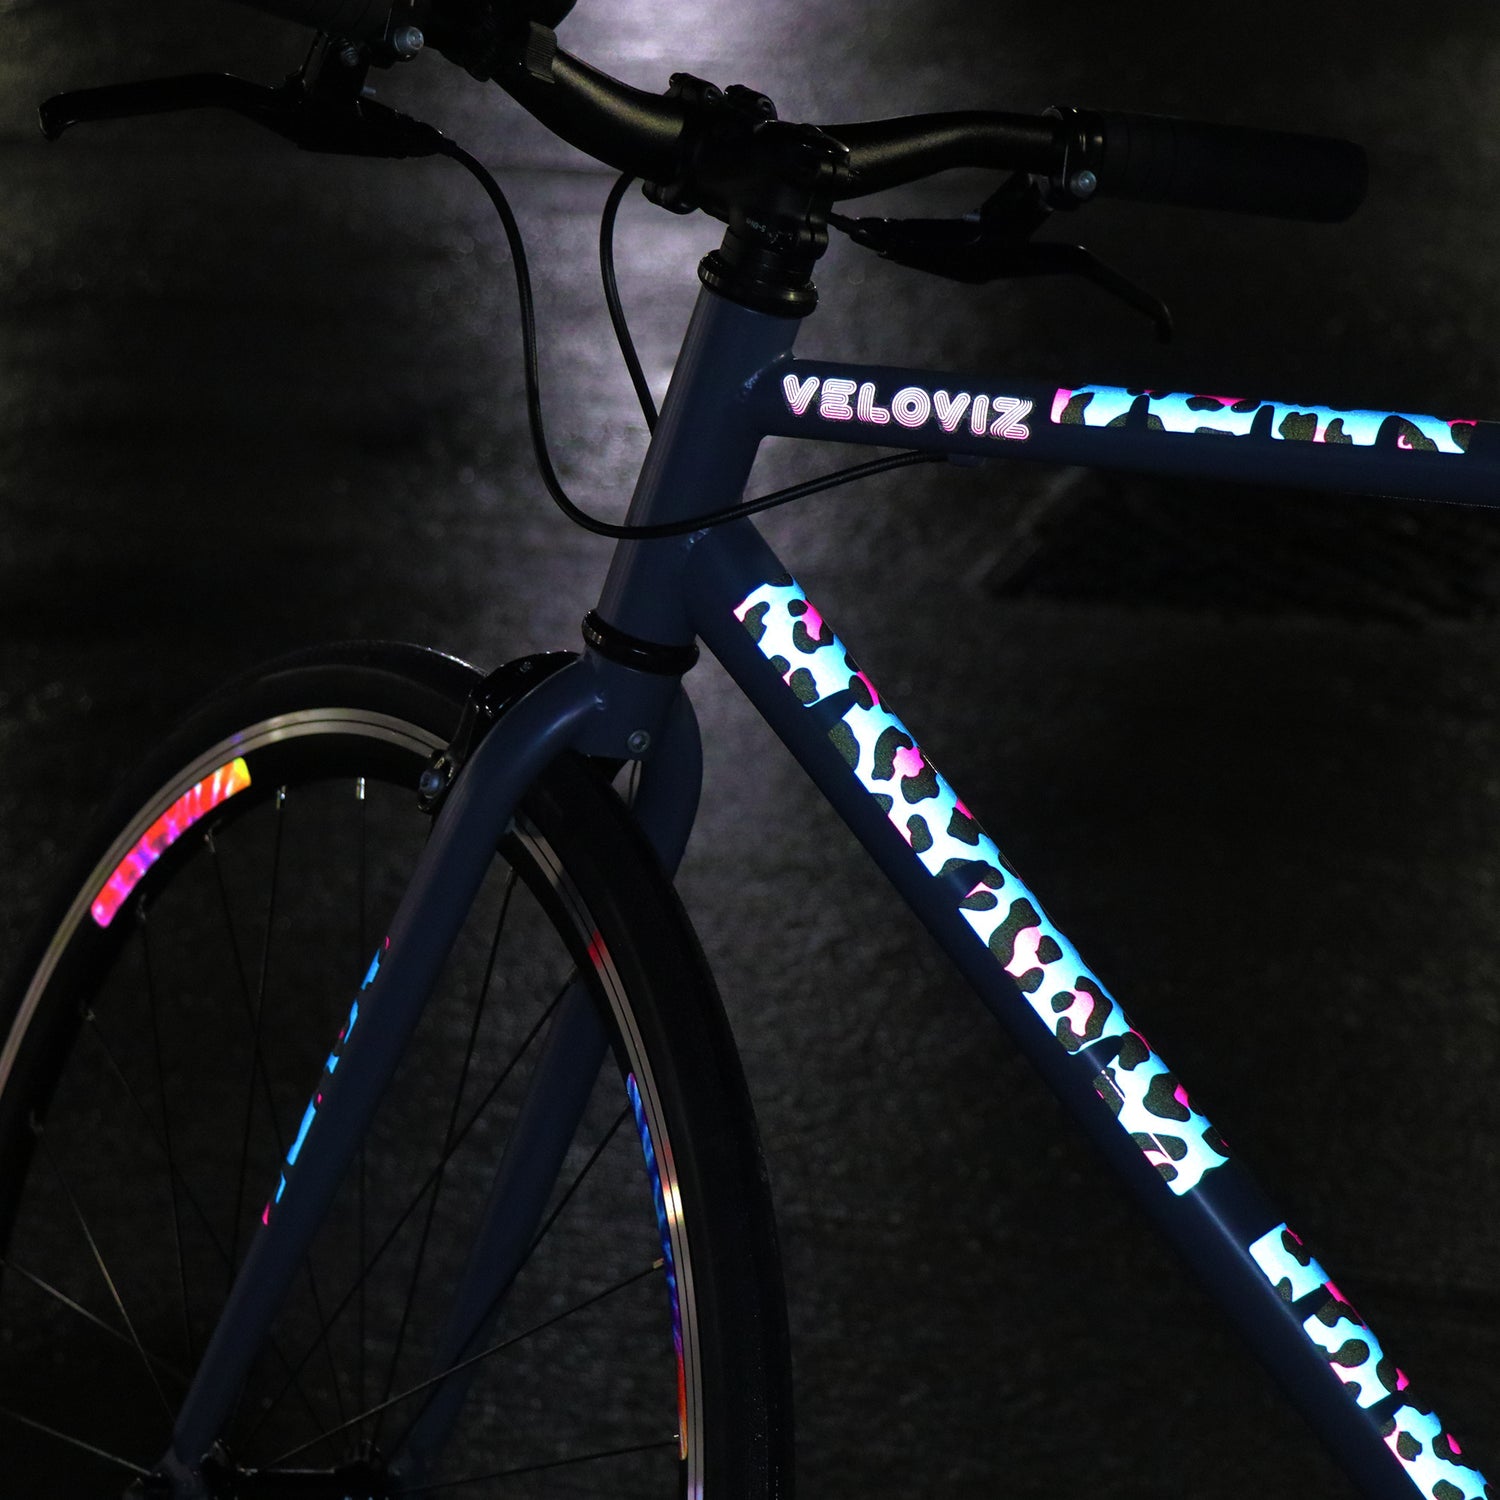 Reflective bike stickers